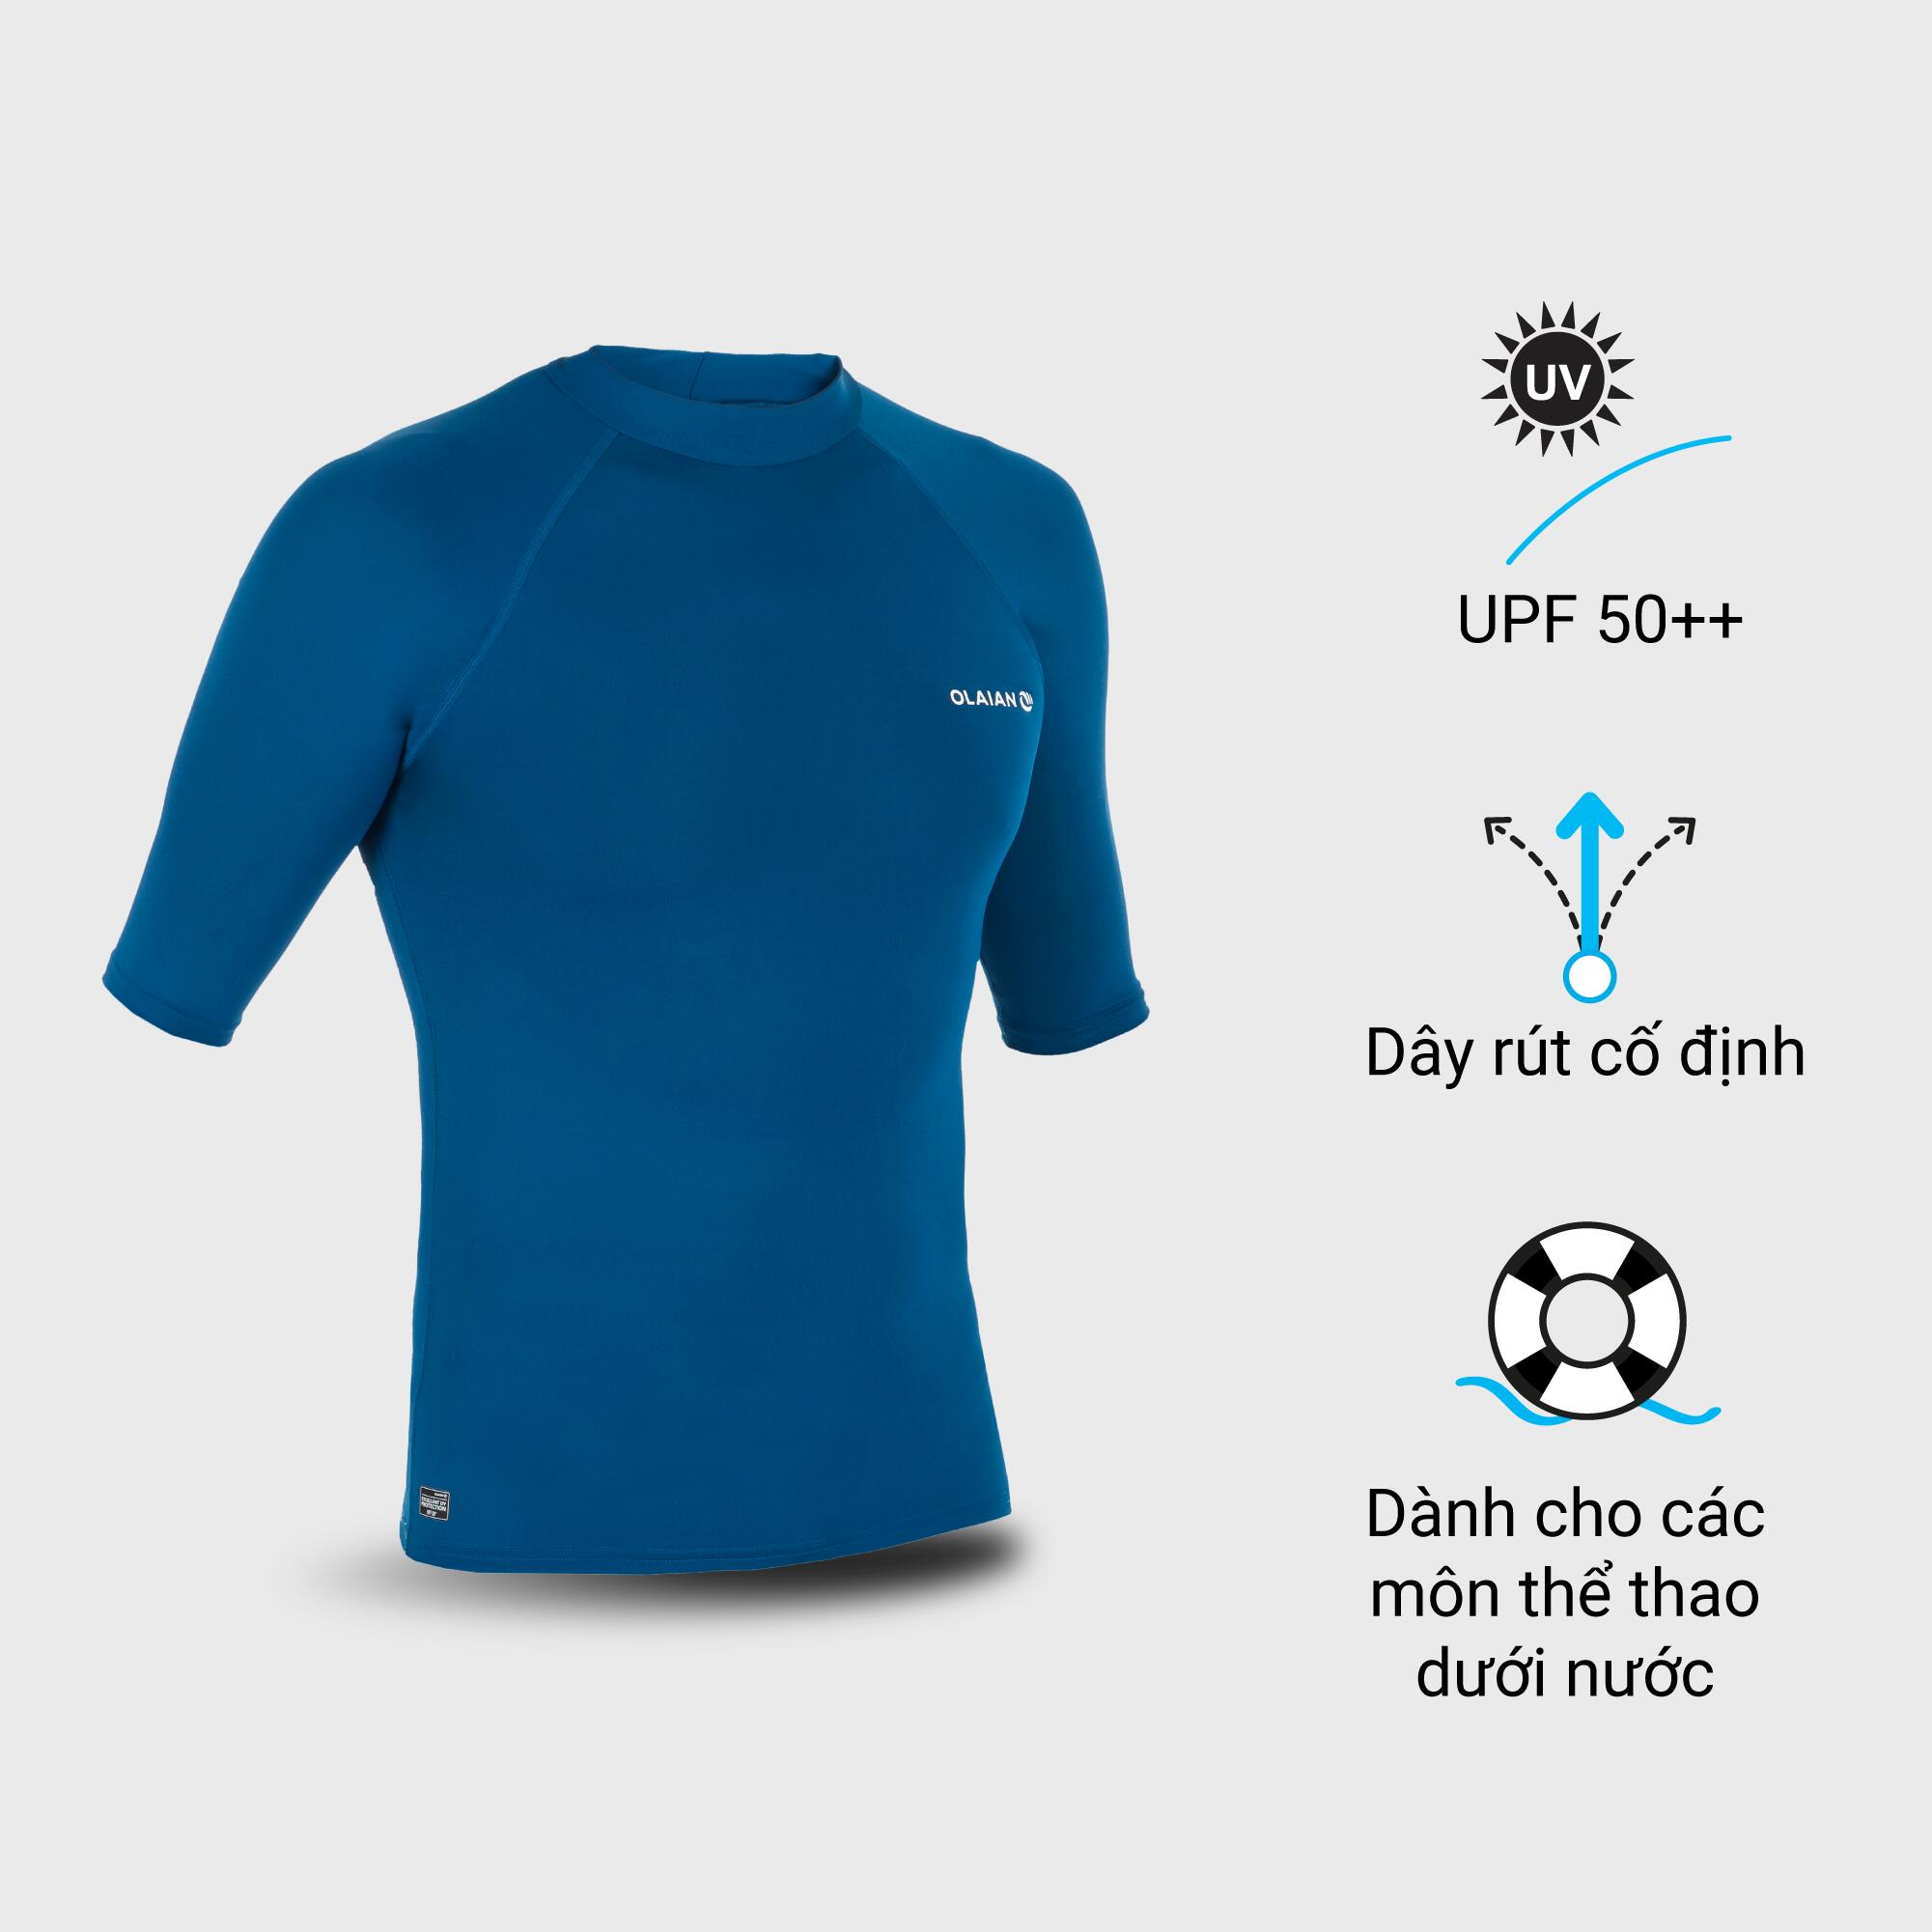 100 Men's Short Sleeve UV Protection Surfing Top T-Shirt - Blue 2/4